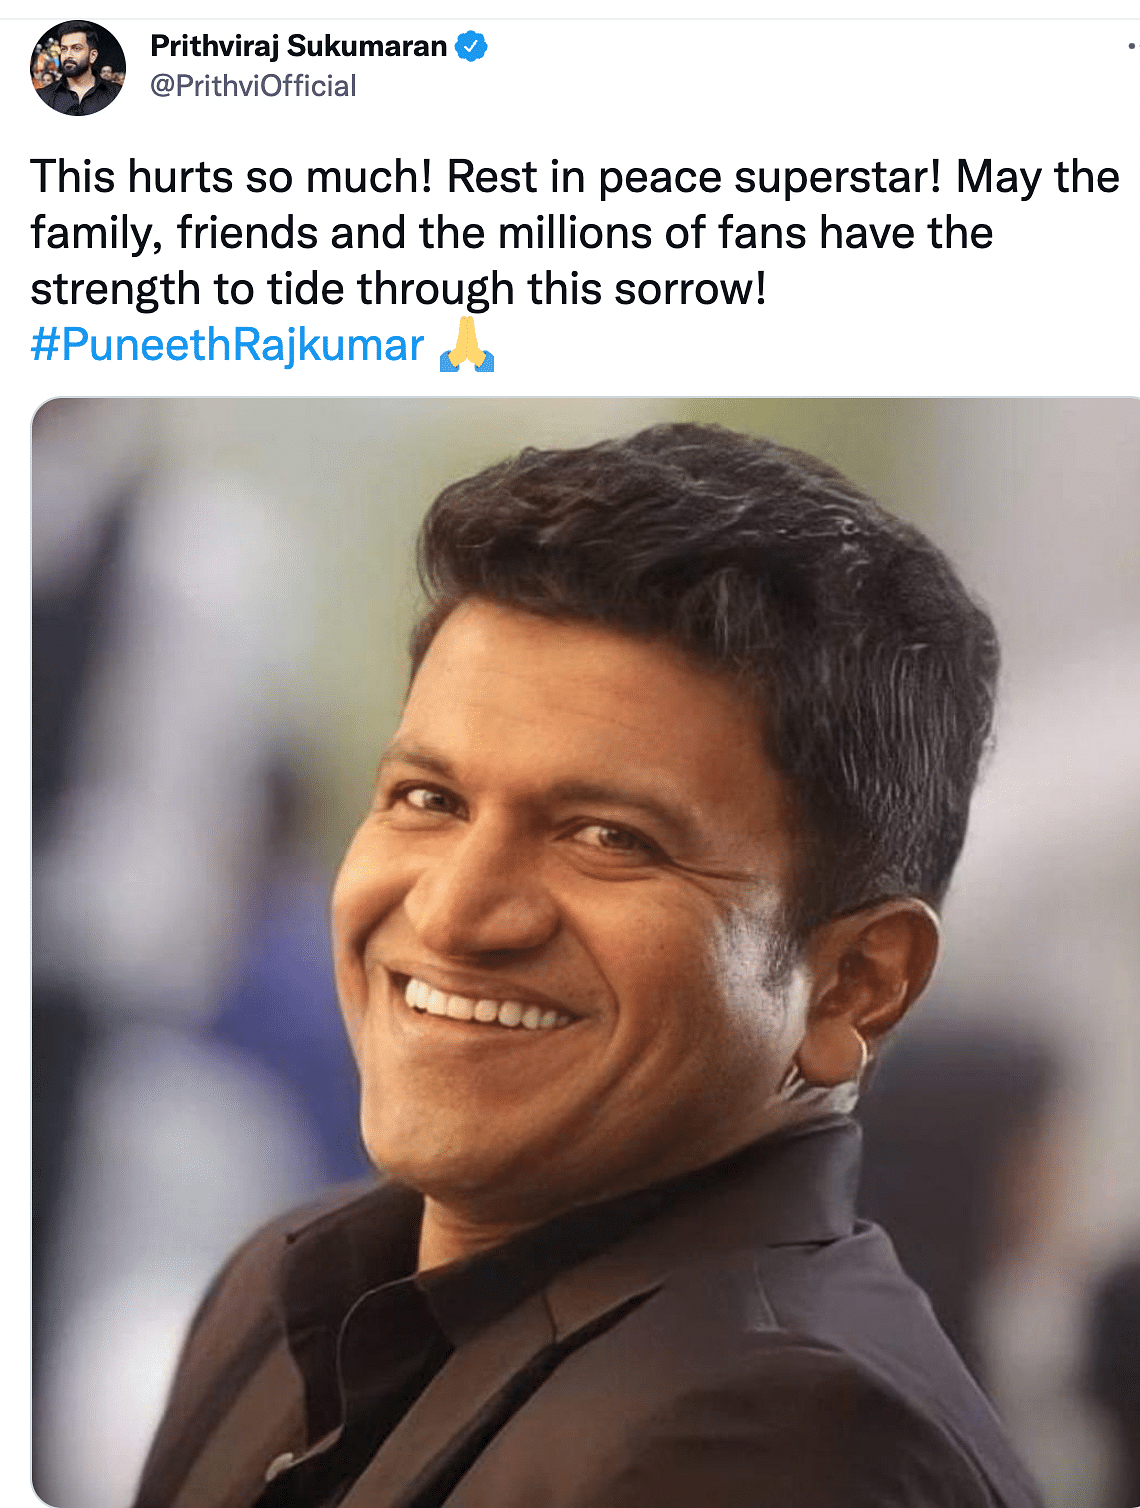 Puneeth Rajkumar passed away at the age of 46.